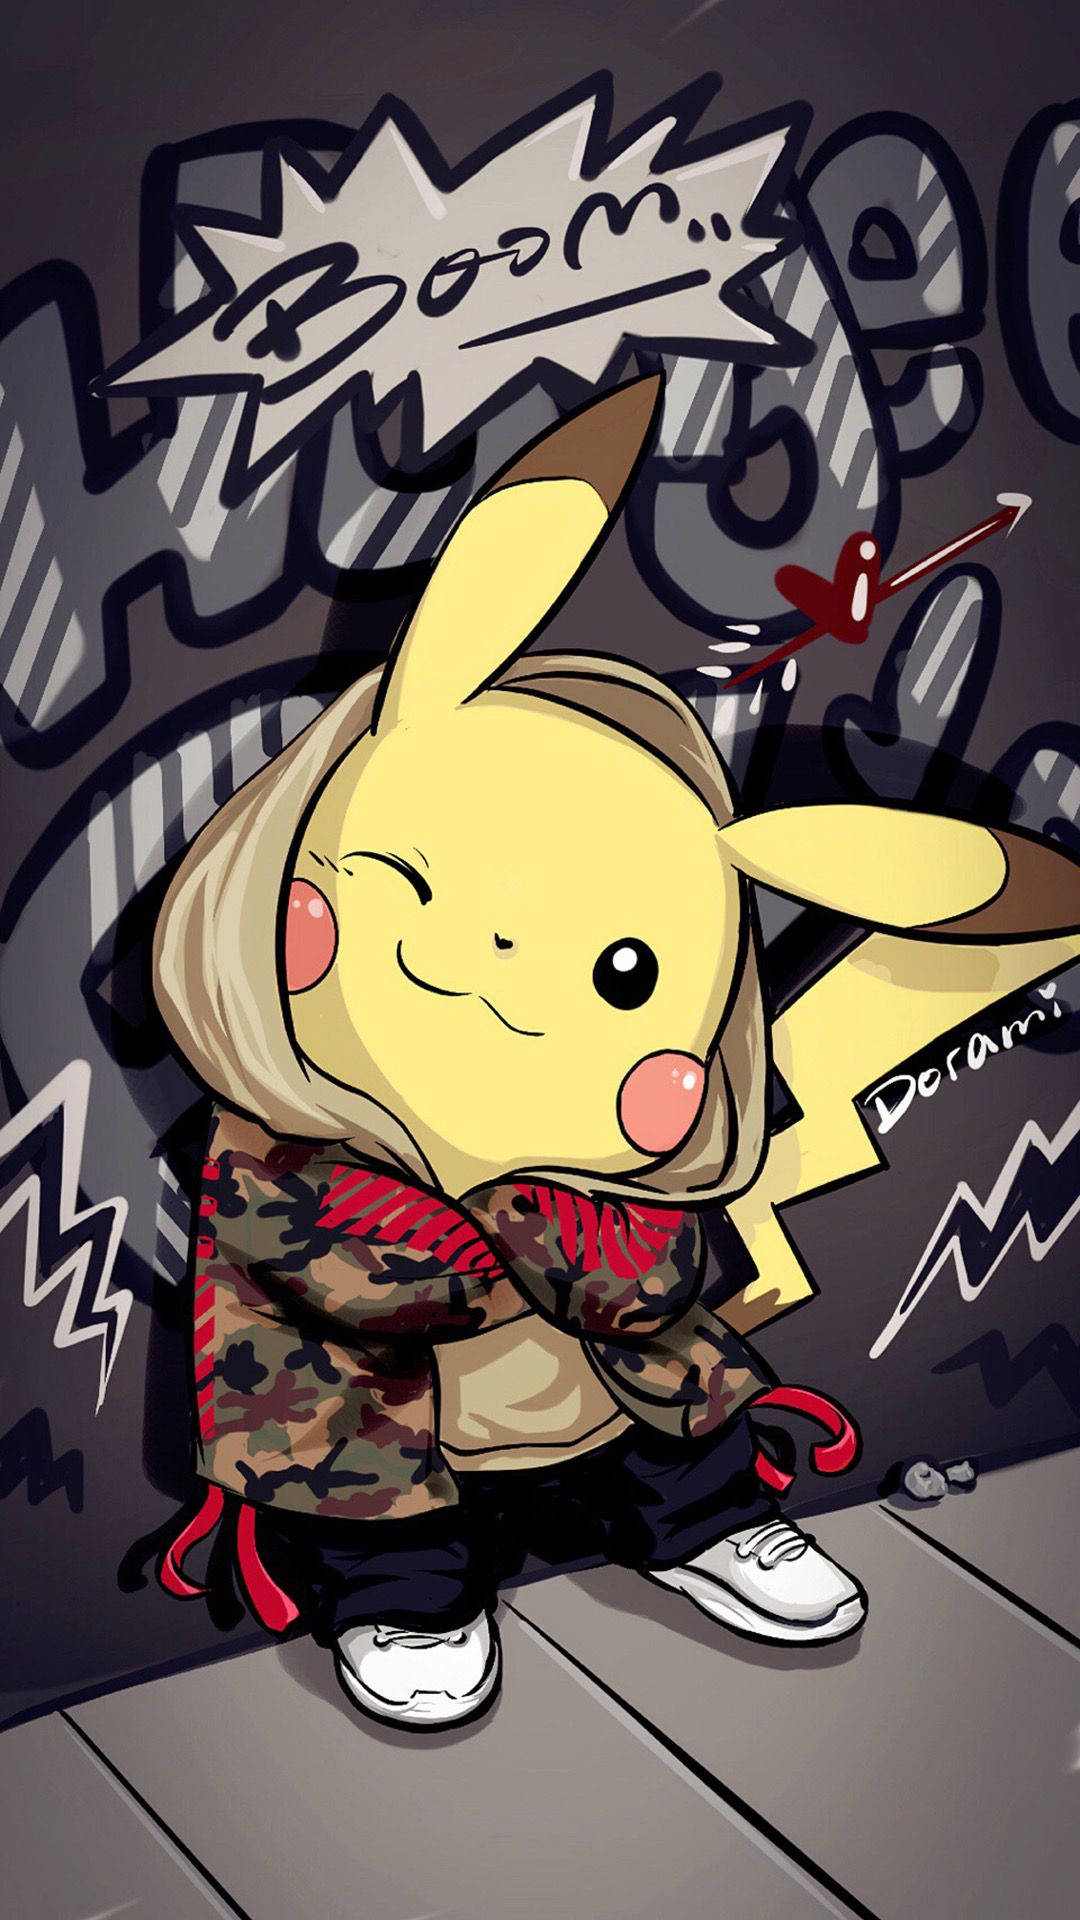 Download Pikachu With Graffiti Art Wallpaper 